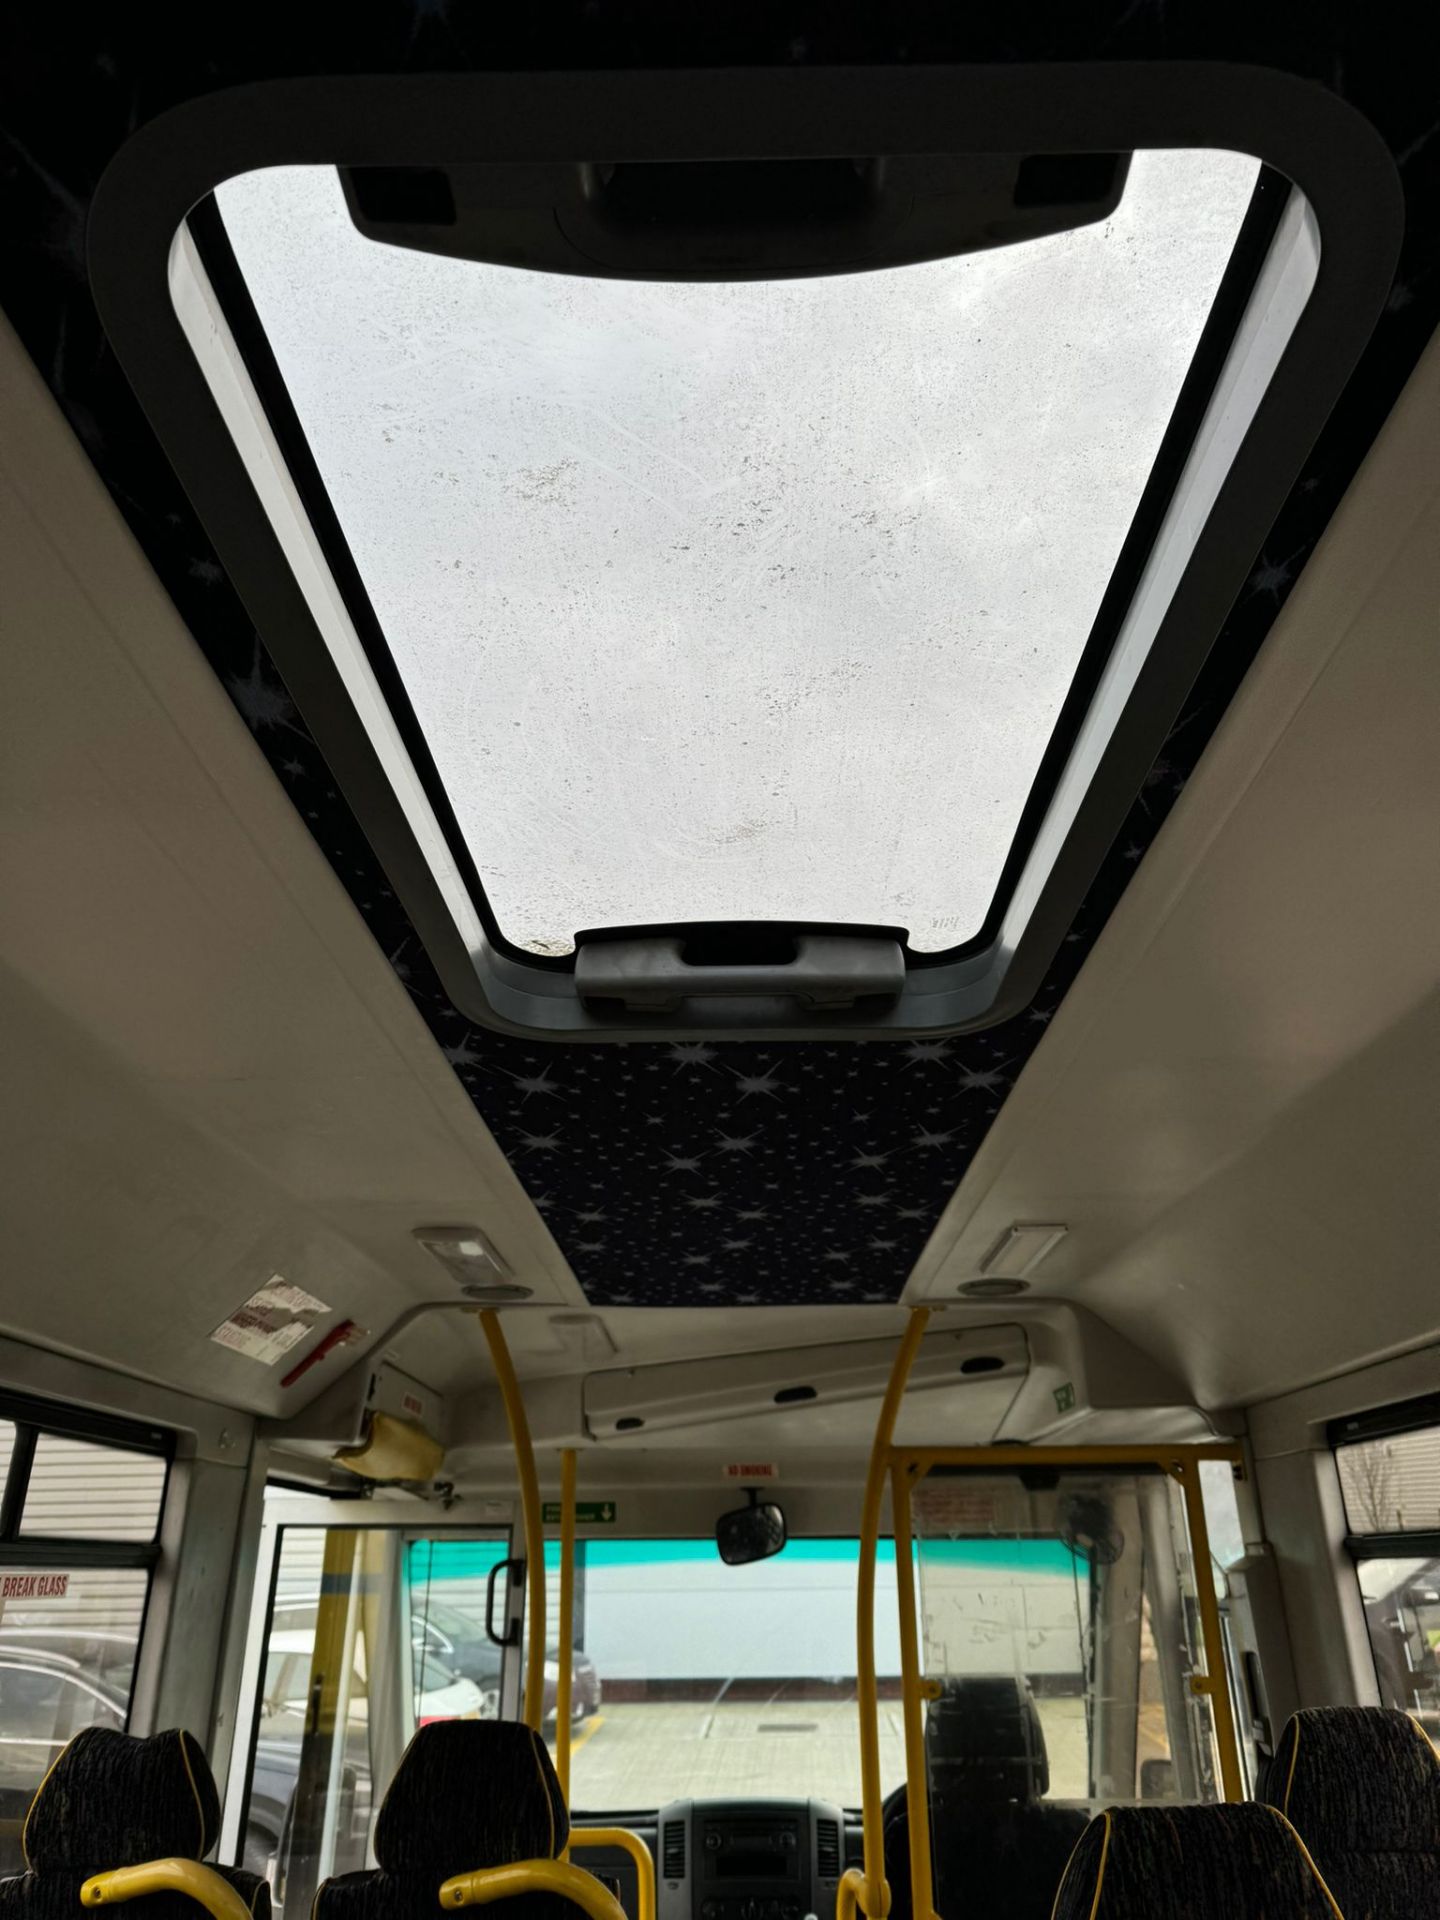 NO RESERVE - EX-COUNCIL FLEET VEHICLE - 2008, Mercedes-Benz Sprinter (WX08 BGV) Welfare Bus - Image 17 of 25